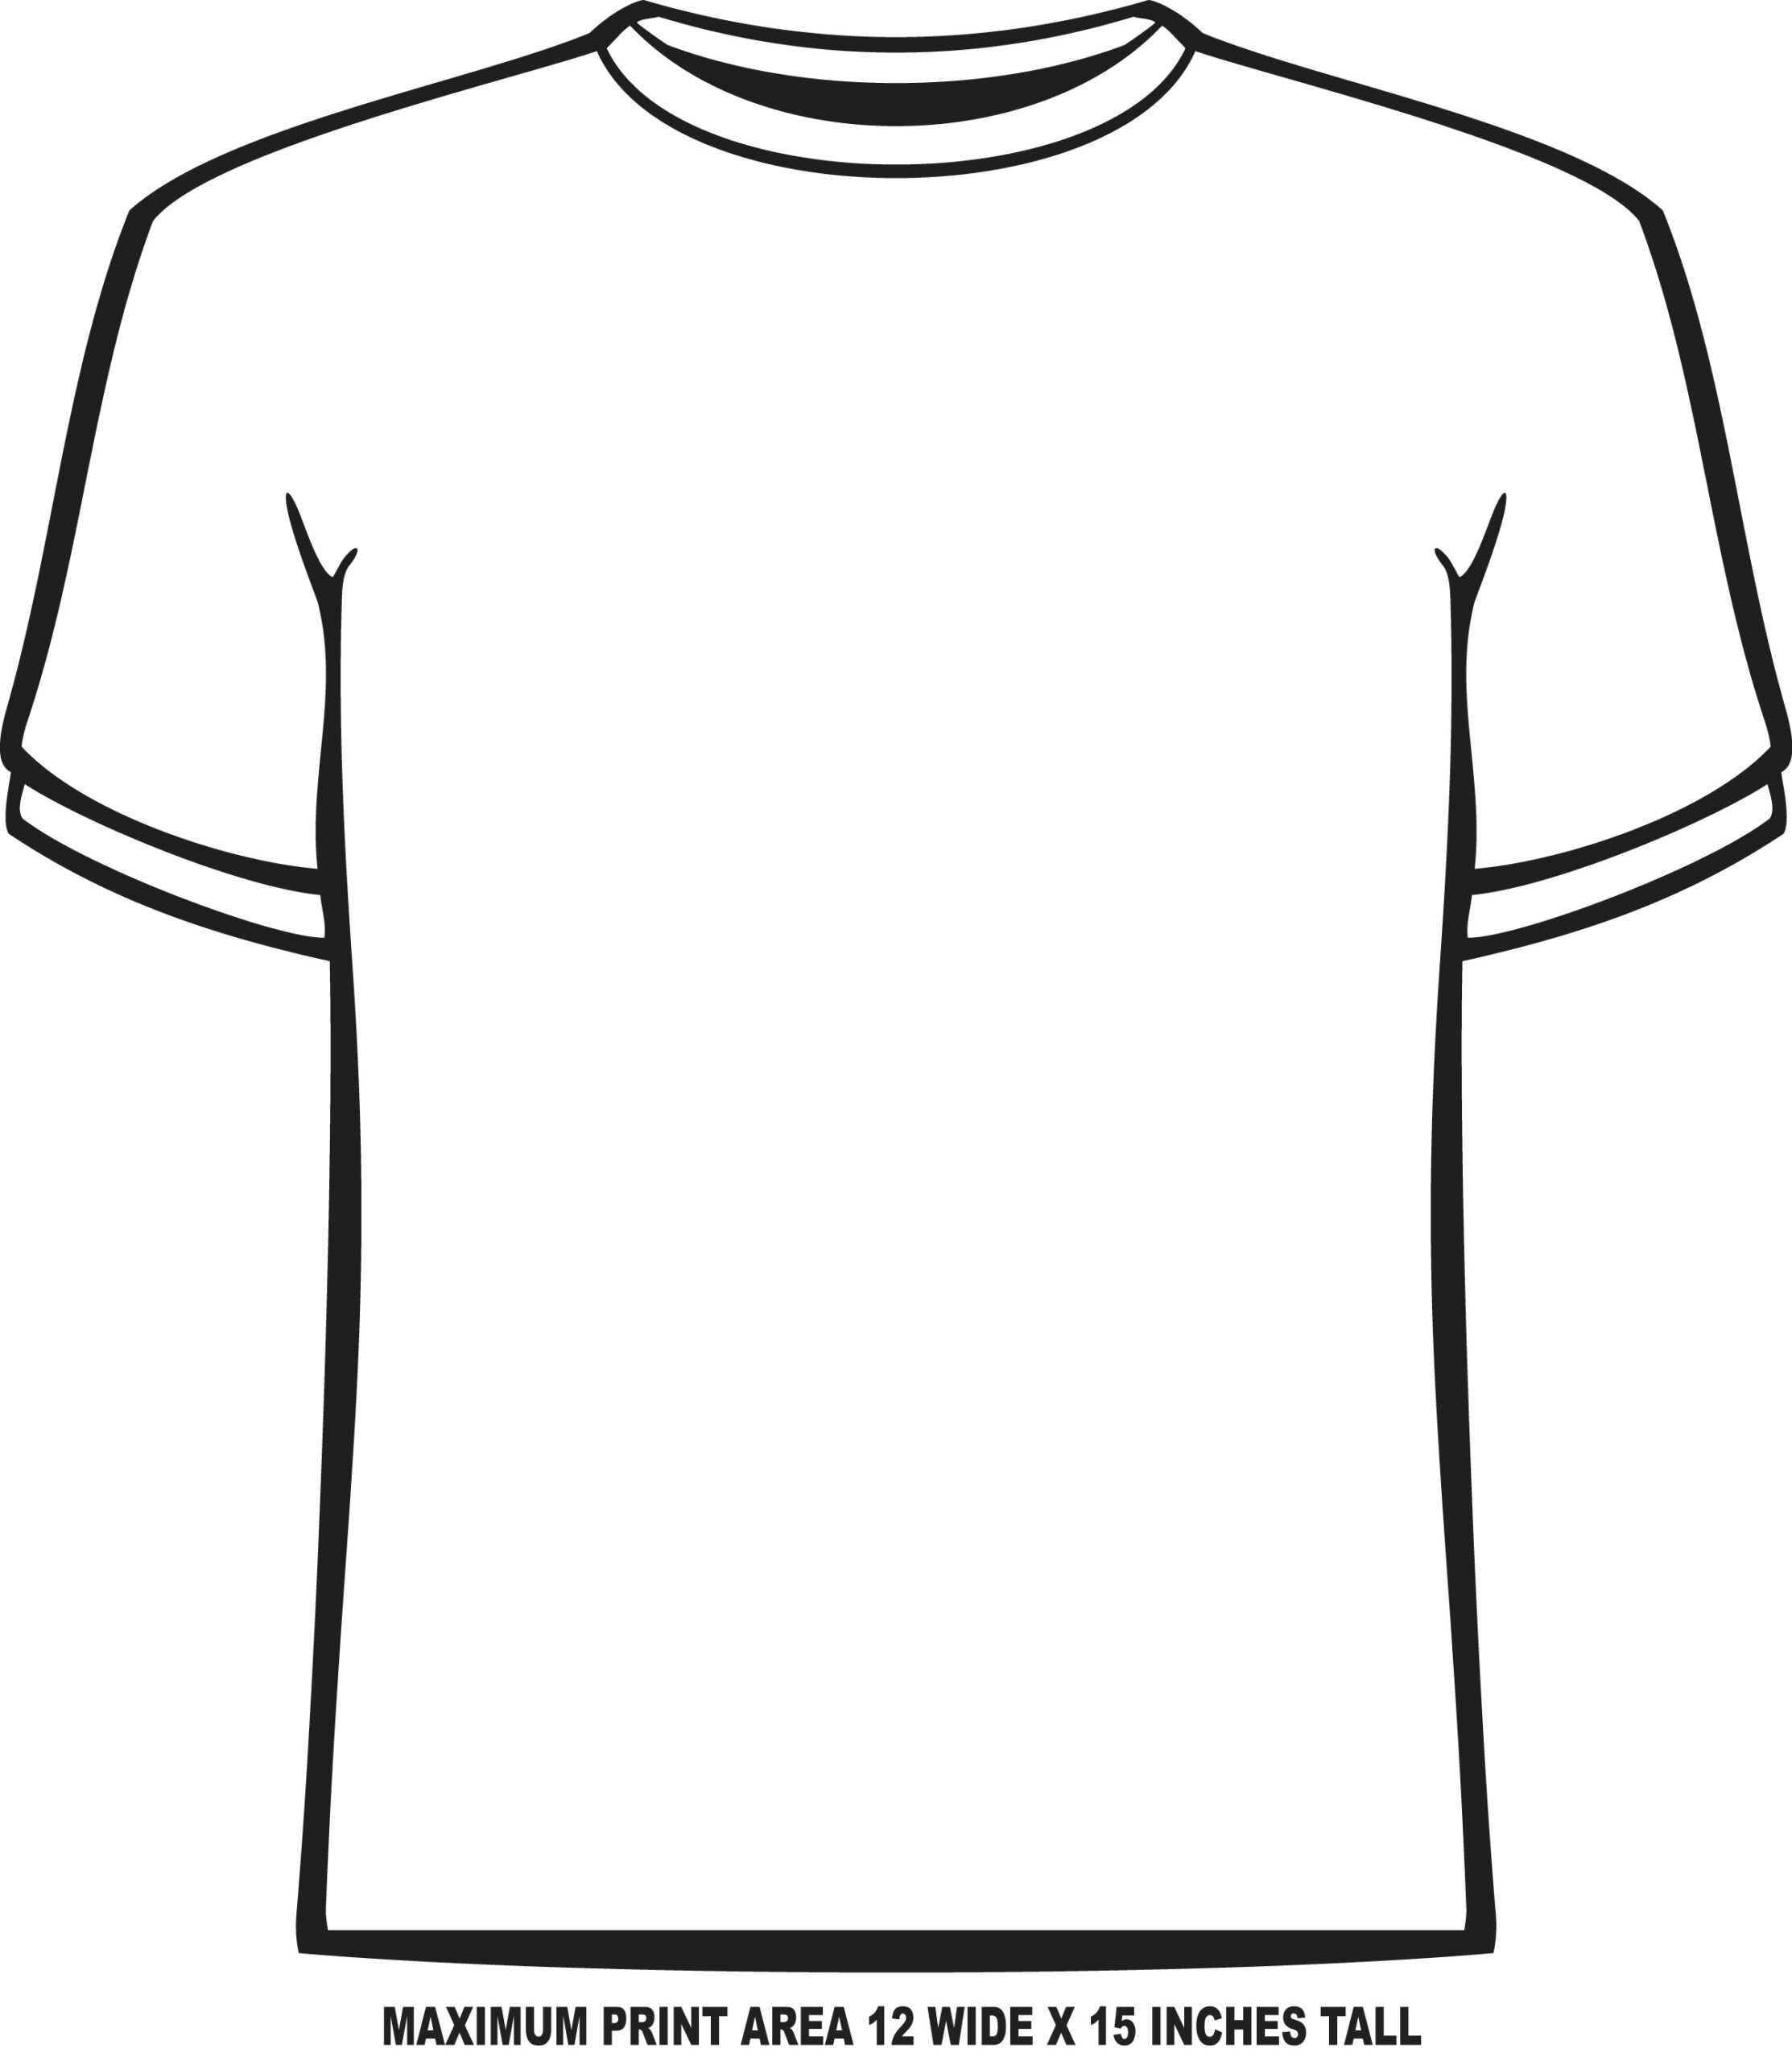 Blank Tshirt Template Pdf - Dreamworks With Regard To Blank Tshirt Template Pdf